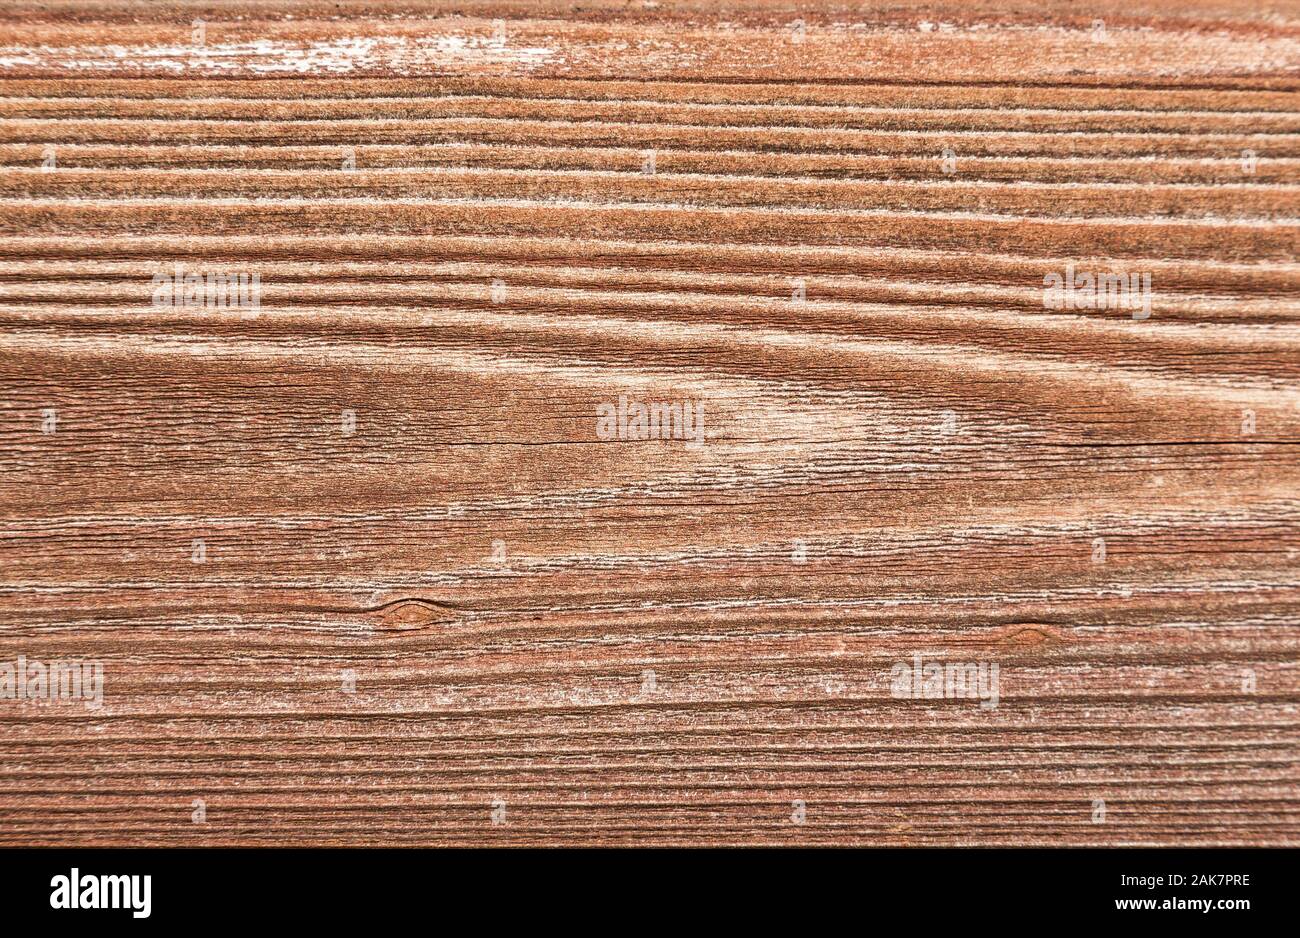 Weathered wood showing grain Stock Photo